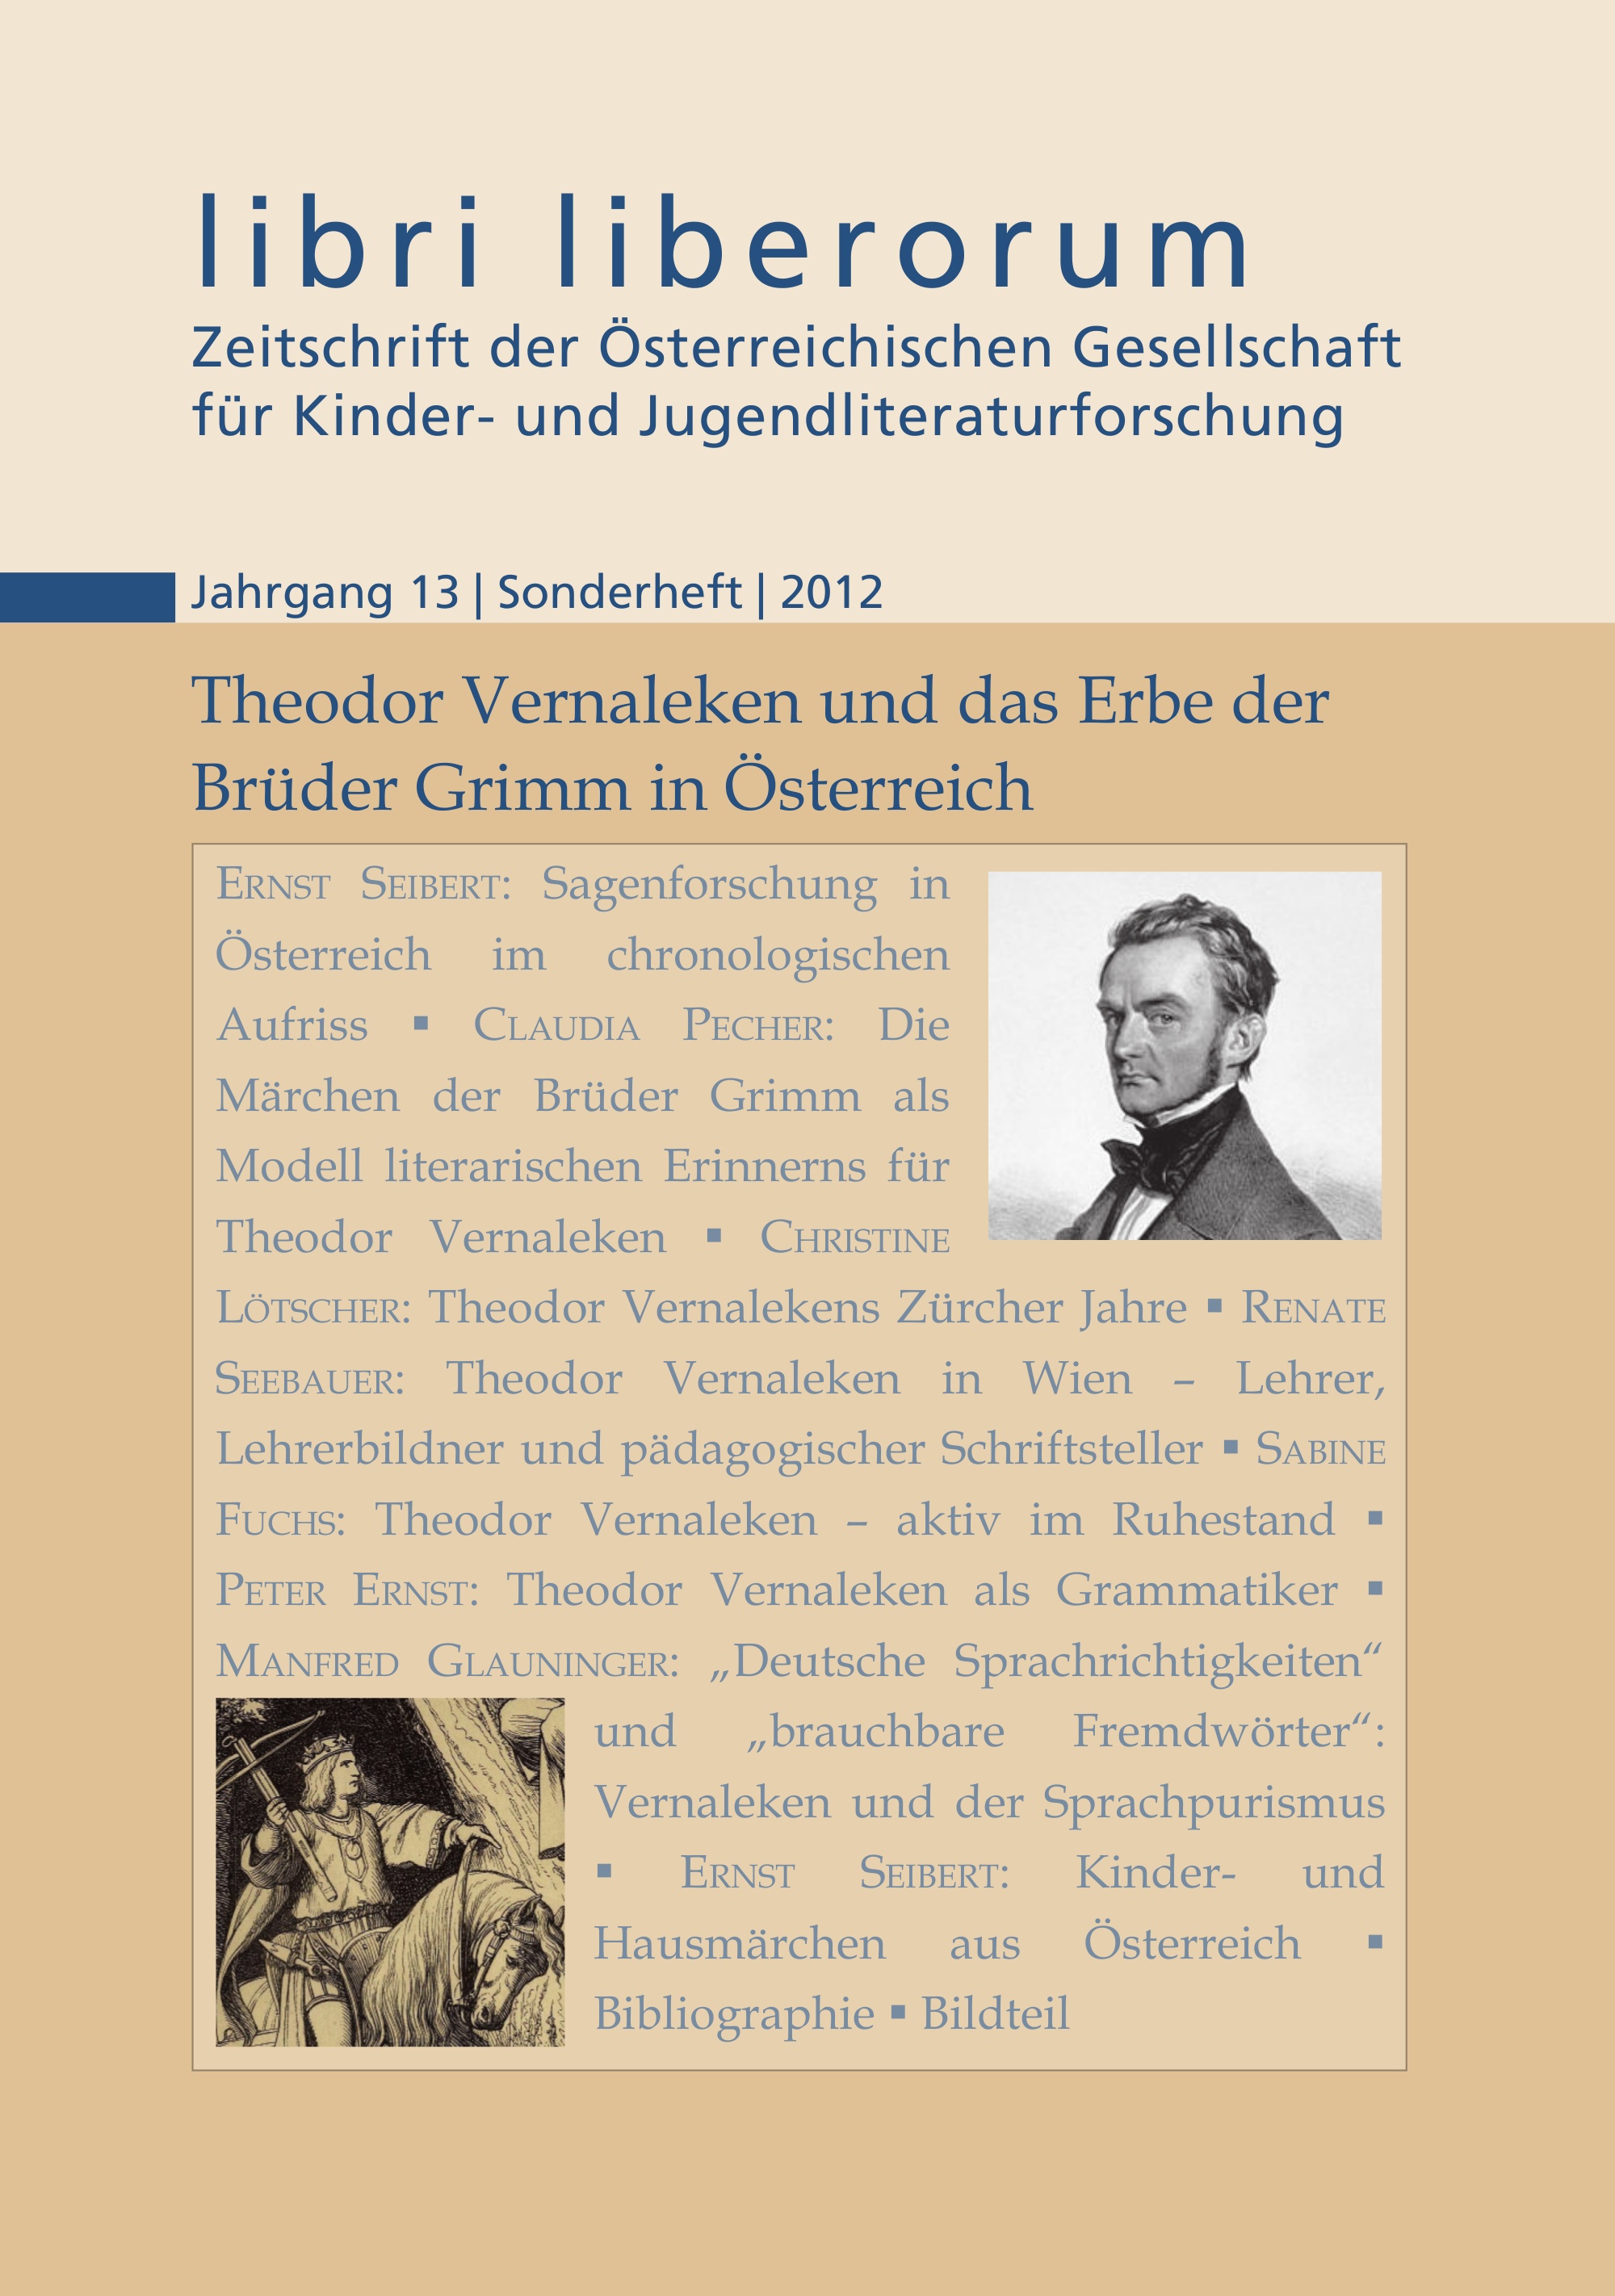 					Ansehen libri liberorum (Jahrgang 13/Sonderheft/2012)
				